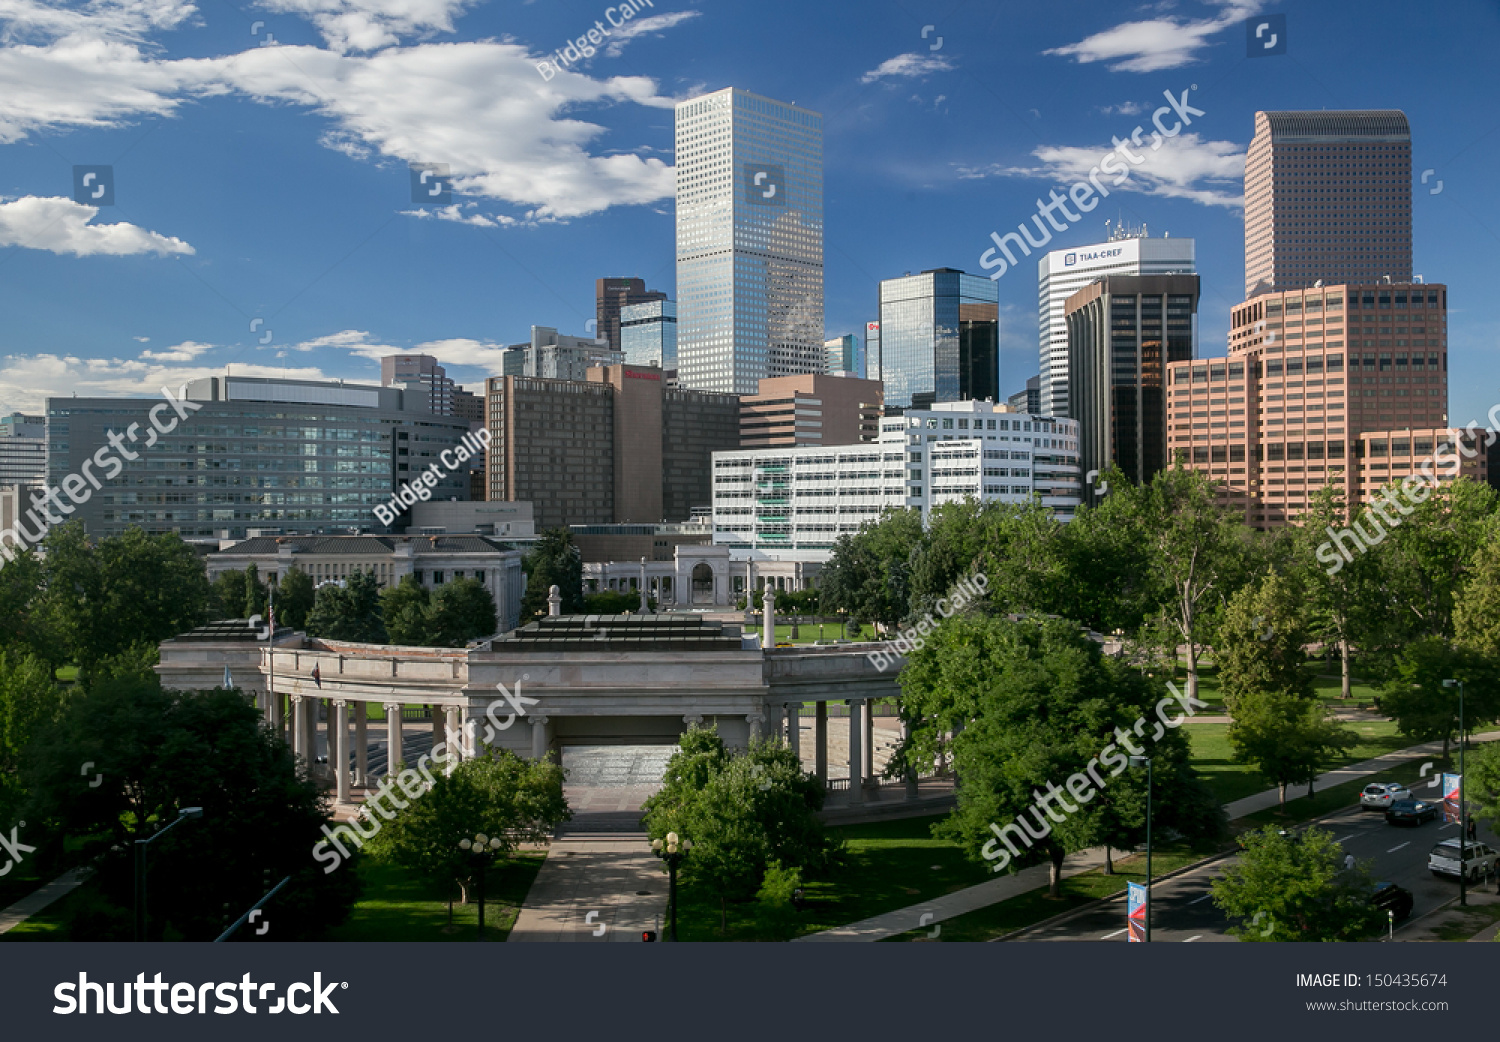 The Mile High City - Denver Colorado Skyline Stock Photo 150435674 ...